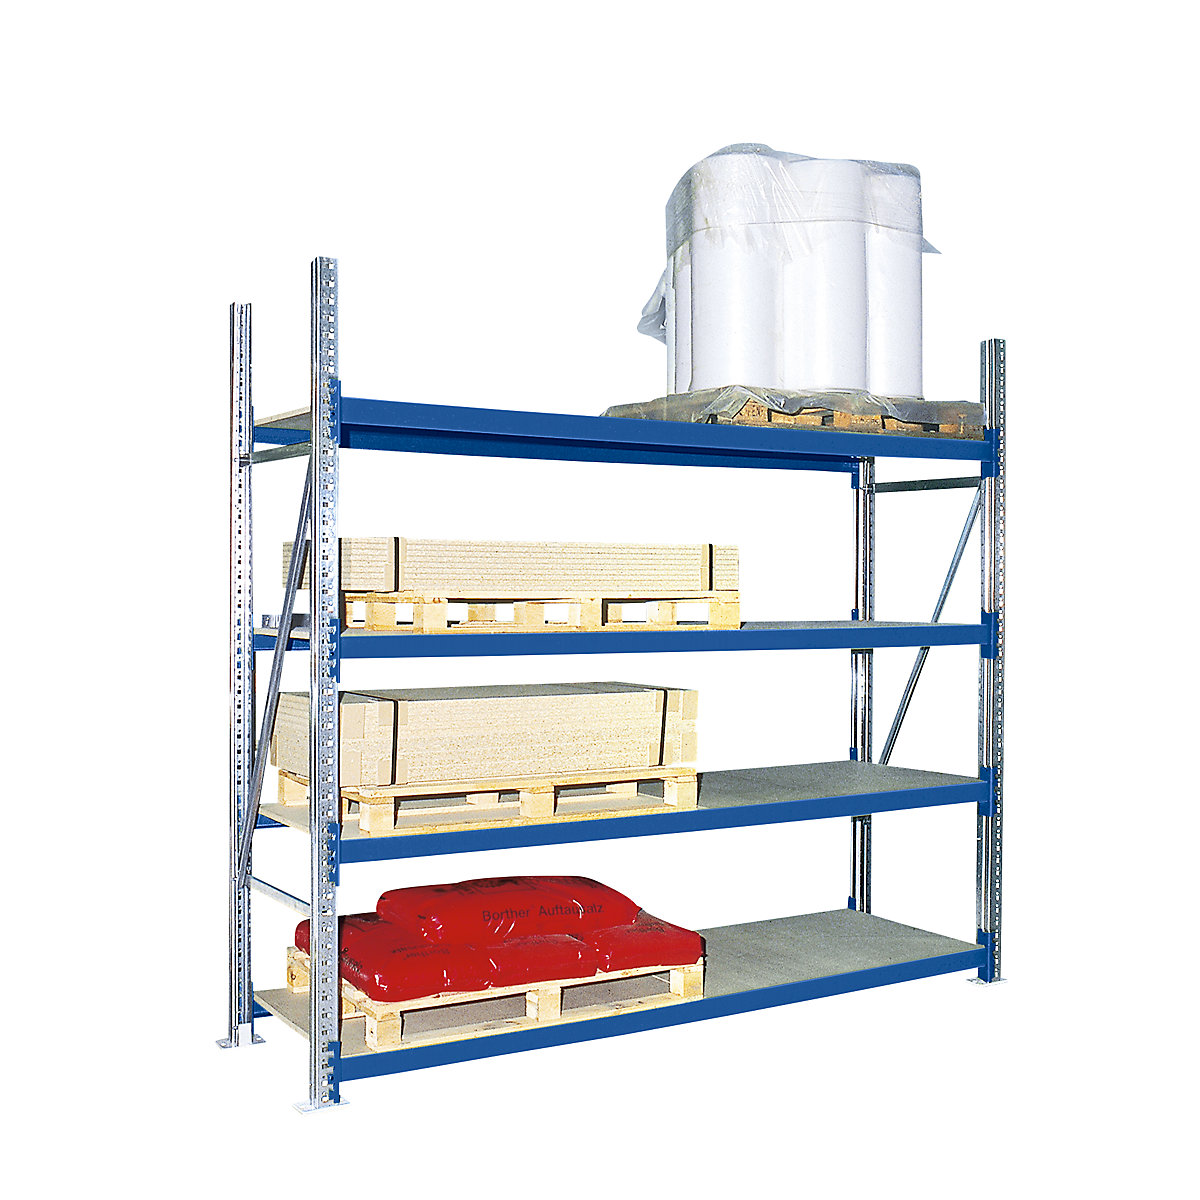 Wide span shelving unit with moulded chipboard shelves – eurokraft pro, depth 1100 mm, cross beam length 1800 mm, height 2500 mm, standard shelf unit, blue RAL 5010